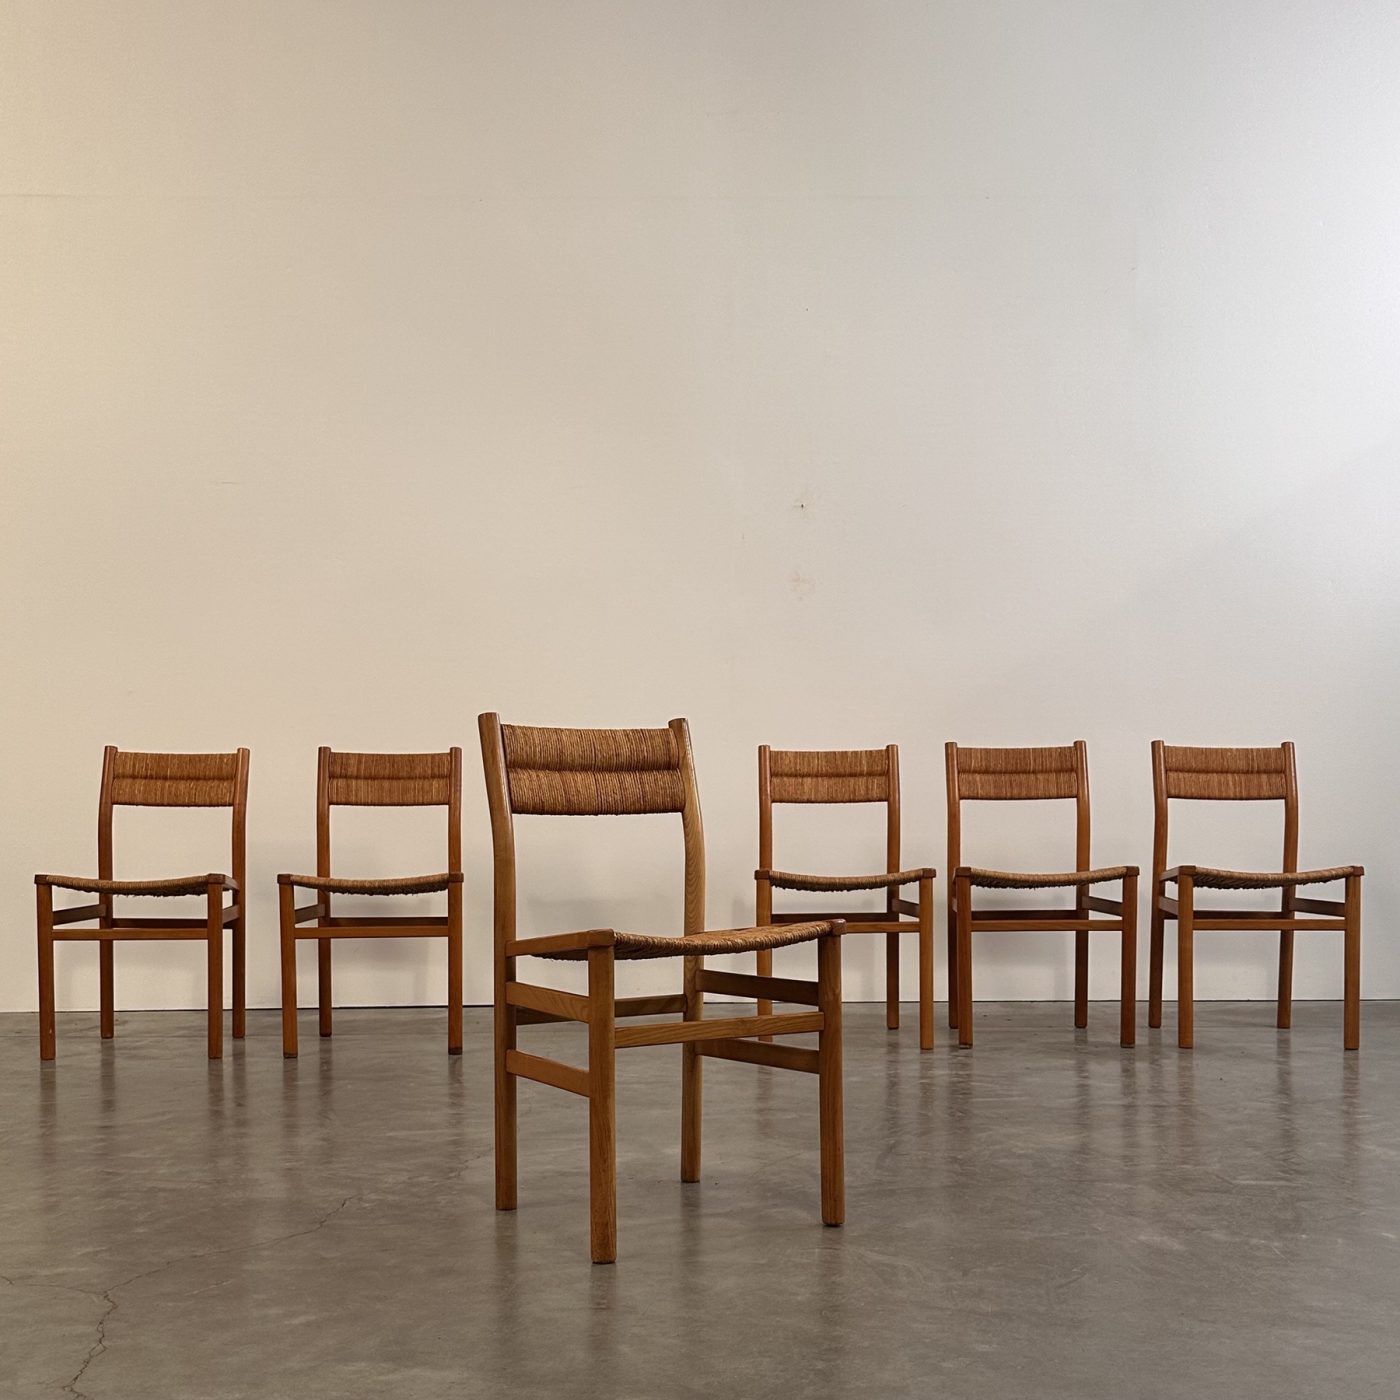 objet-vagabond-delaye-chairs0004